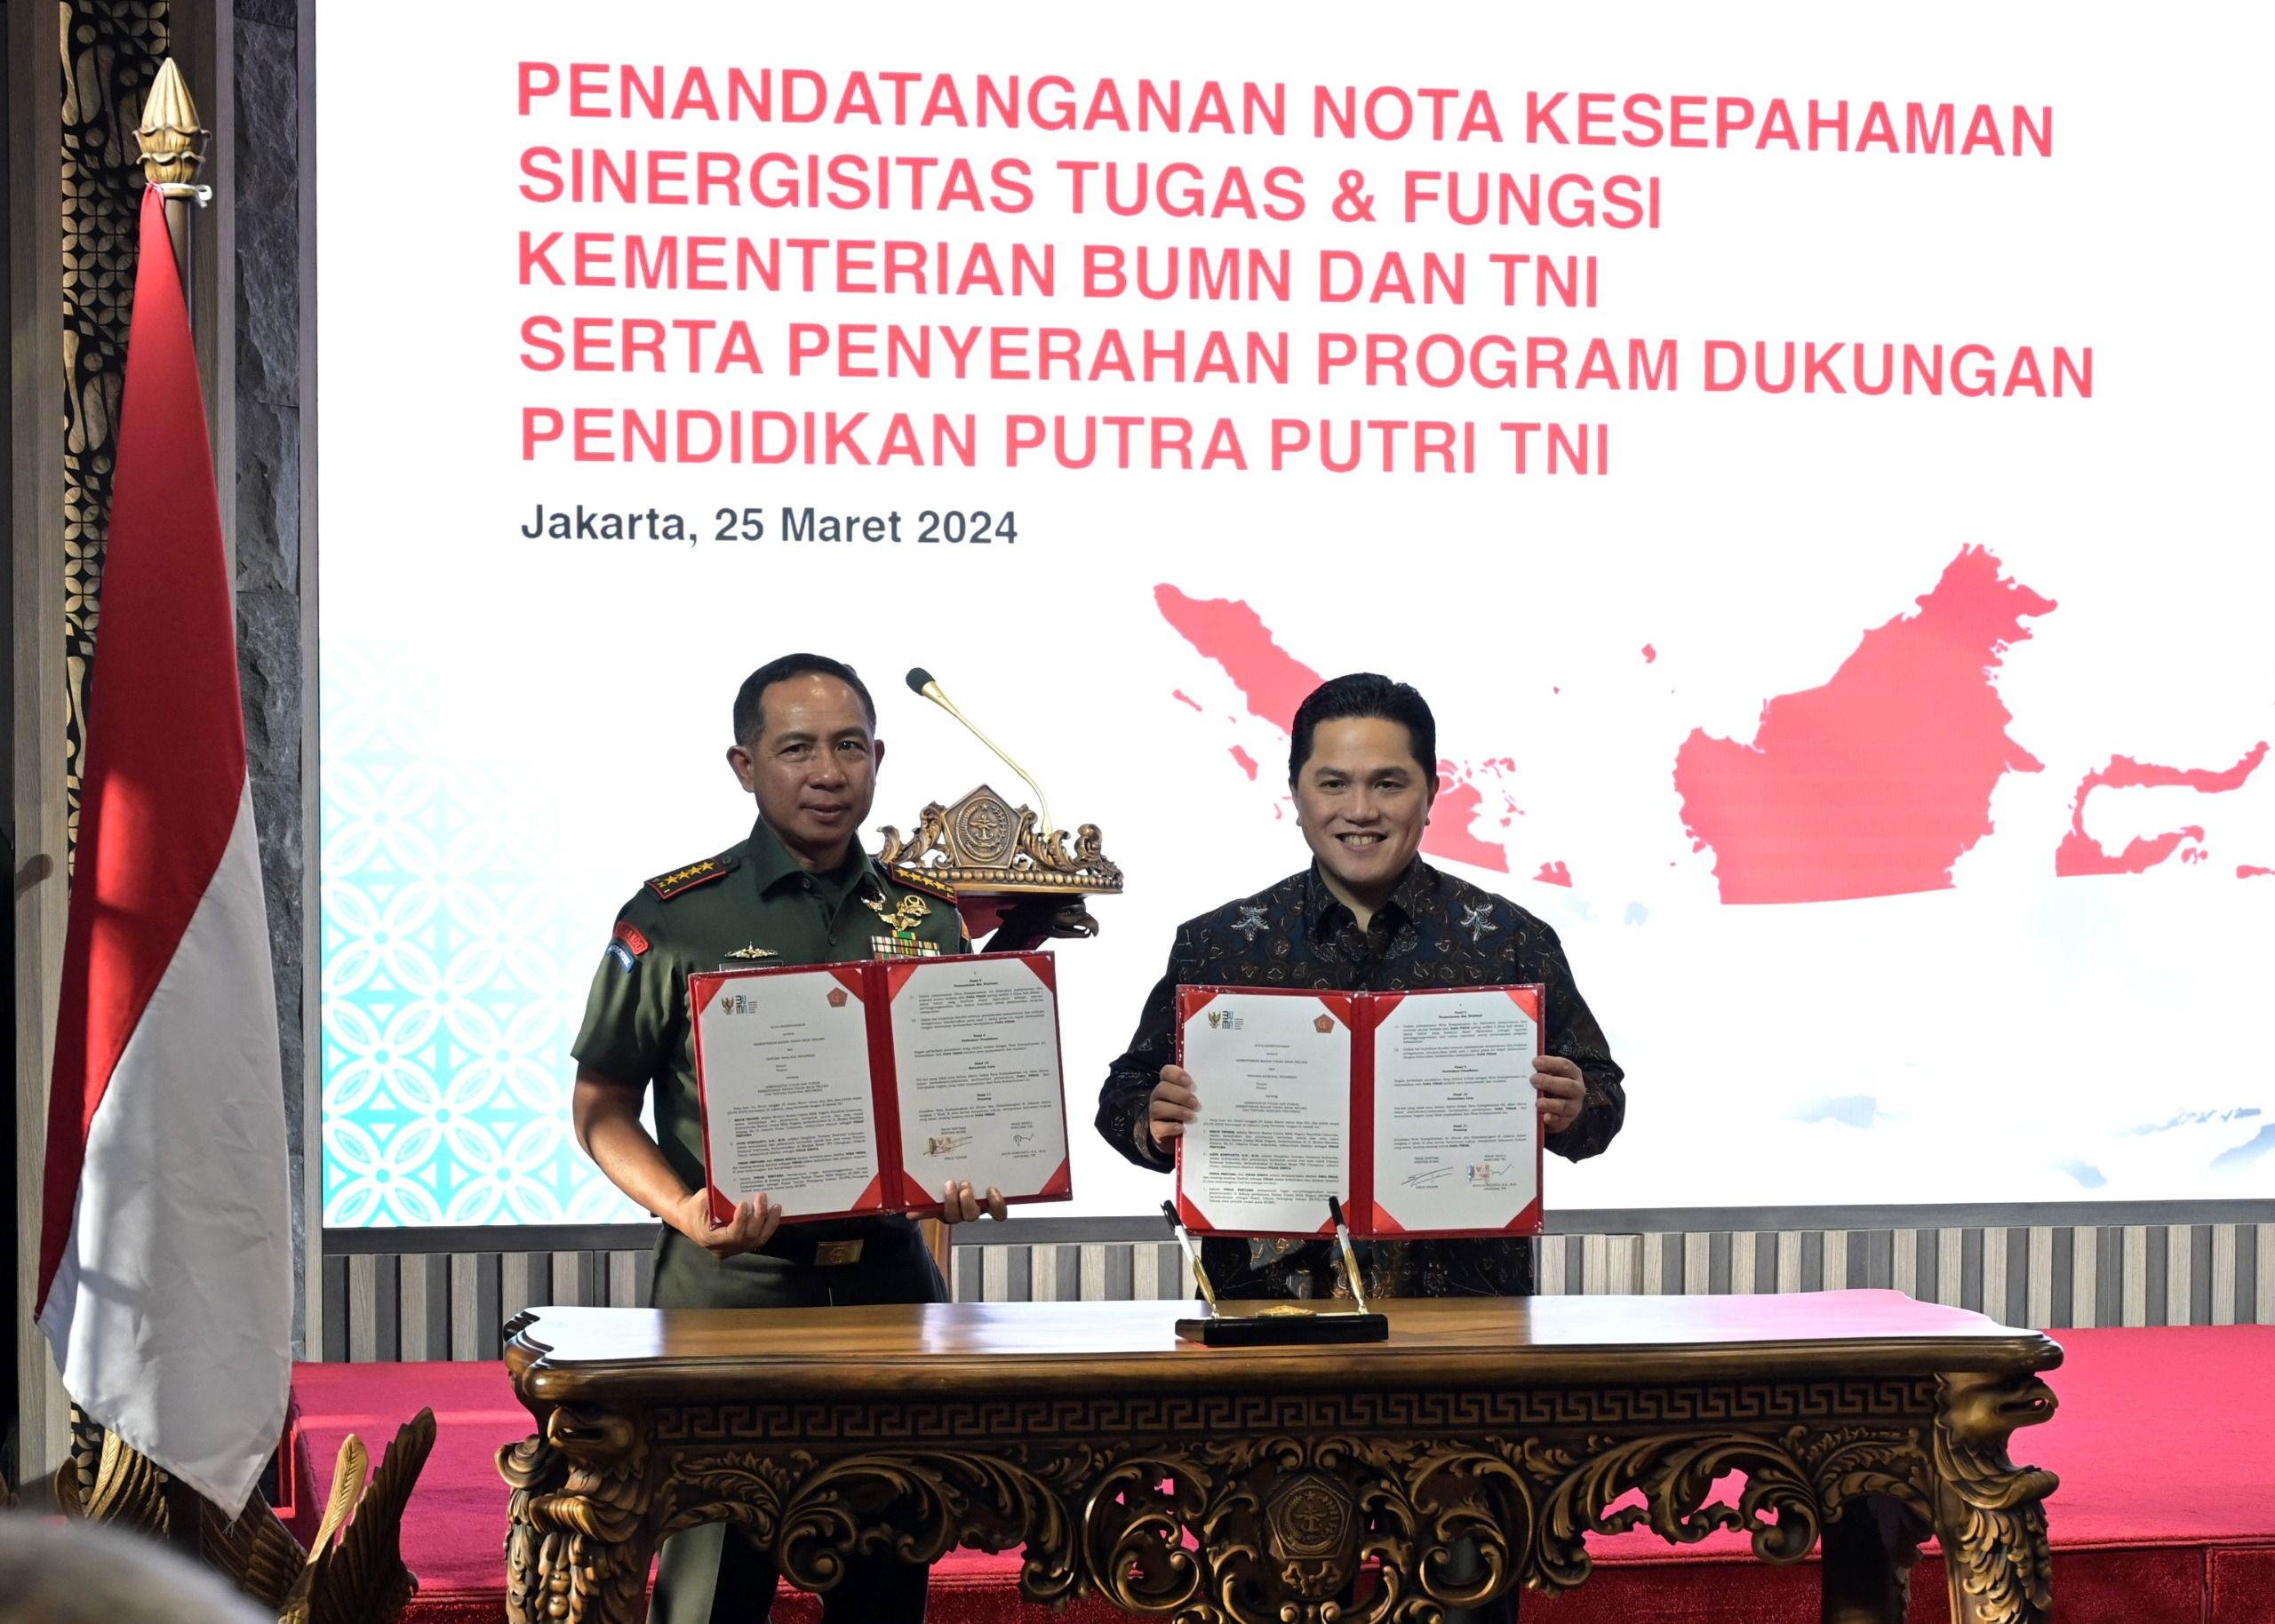 Penandatanganan nota kesepahaman sinergitas dilakukan oleh Menteri BUMN Erick Thohir dan Panglima TNI Jenderal Agus Subiyanto di Rumah Dinas Panglima TNI, Jakarta pada Senin, 25 Maret 2024.